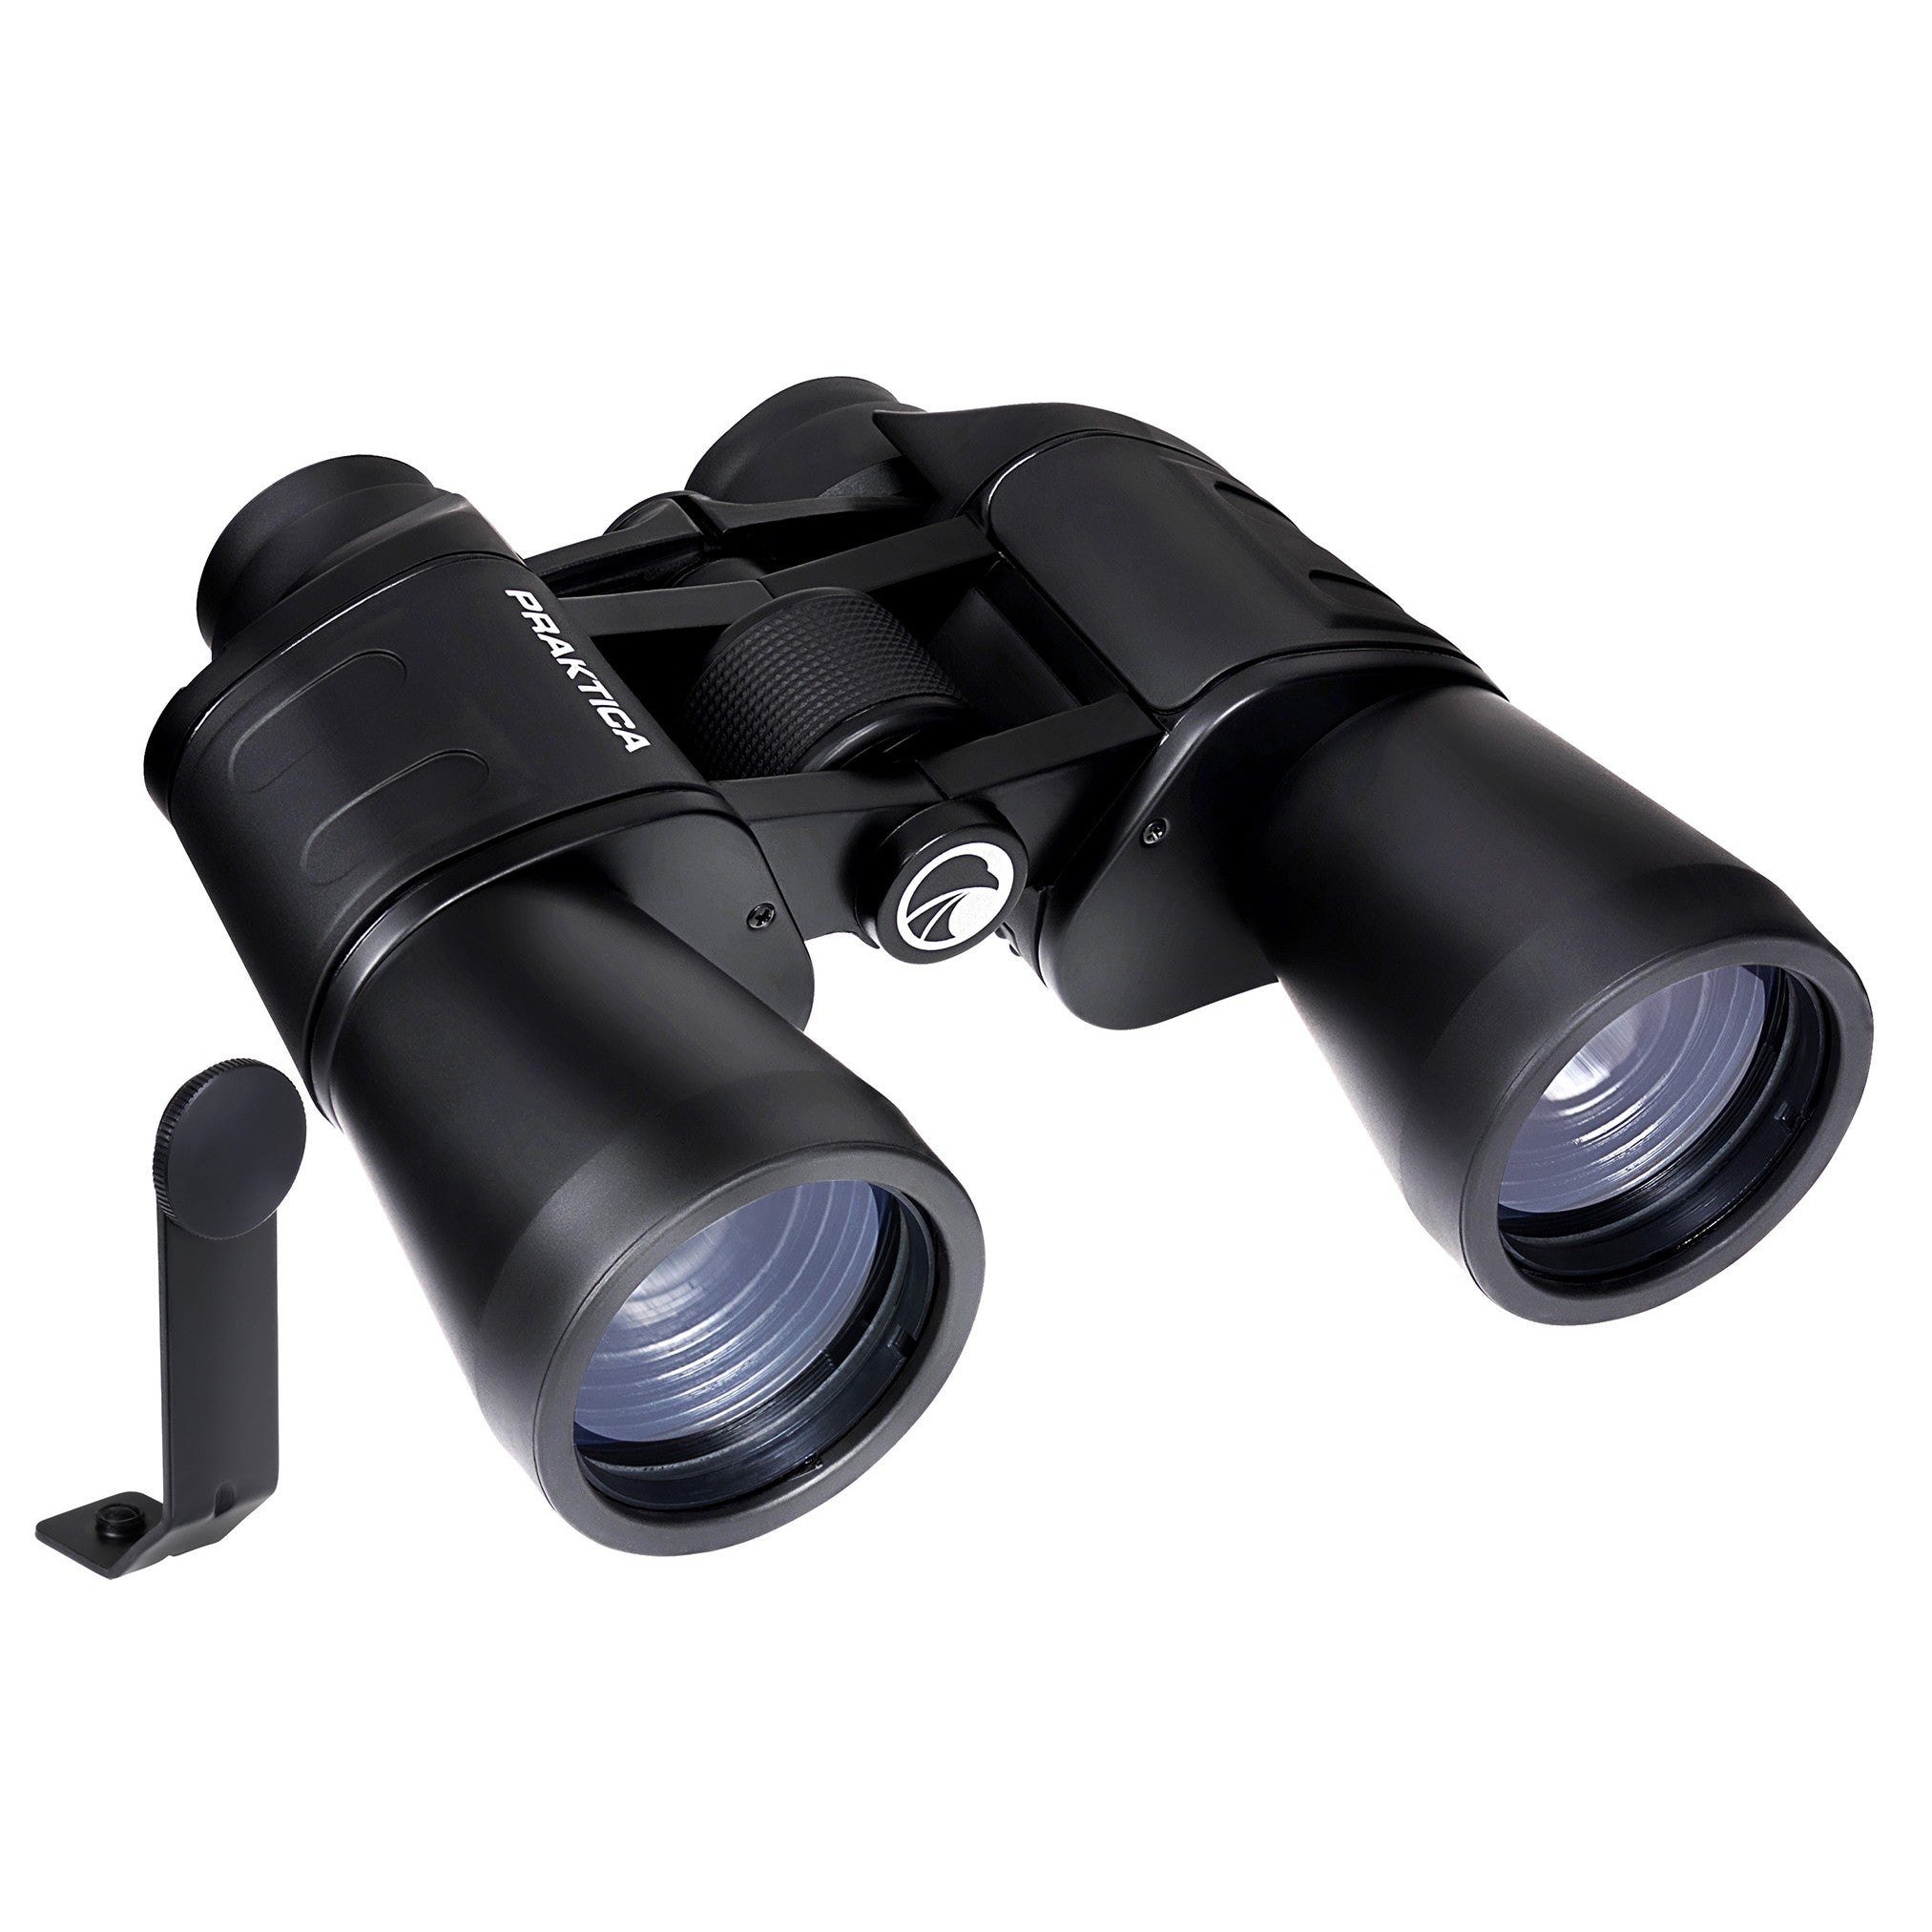 PRAKTICA Falcon 10x50mm Porro Prism Field Binoculars - Black (Binoculars + Tripod Mount)